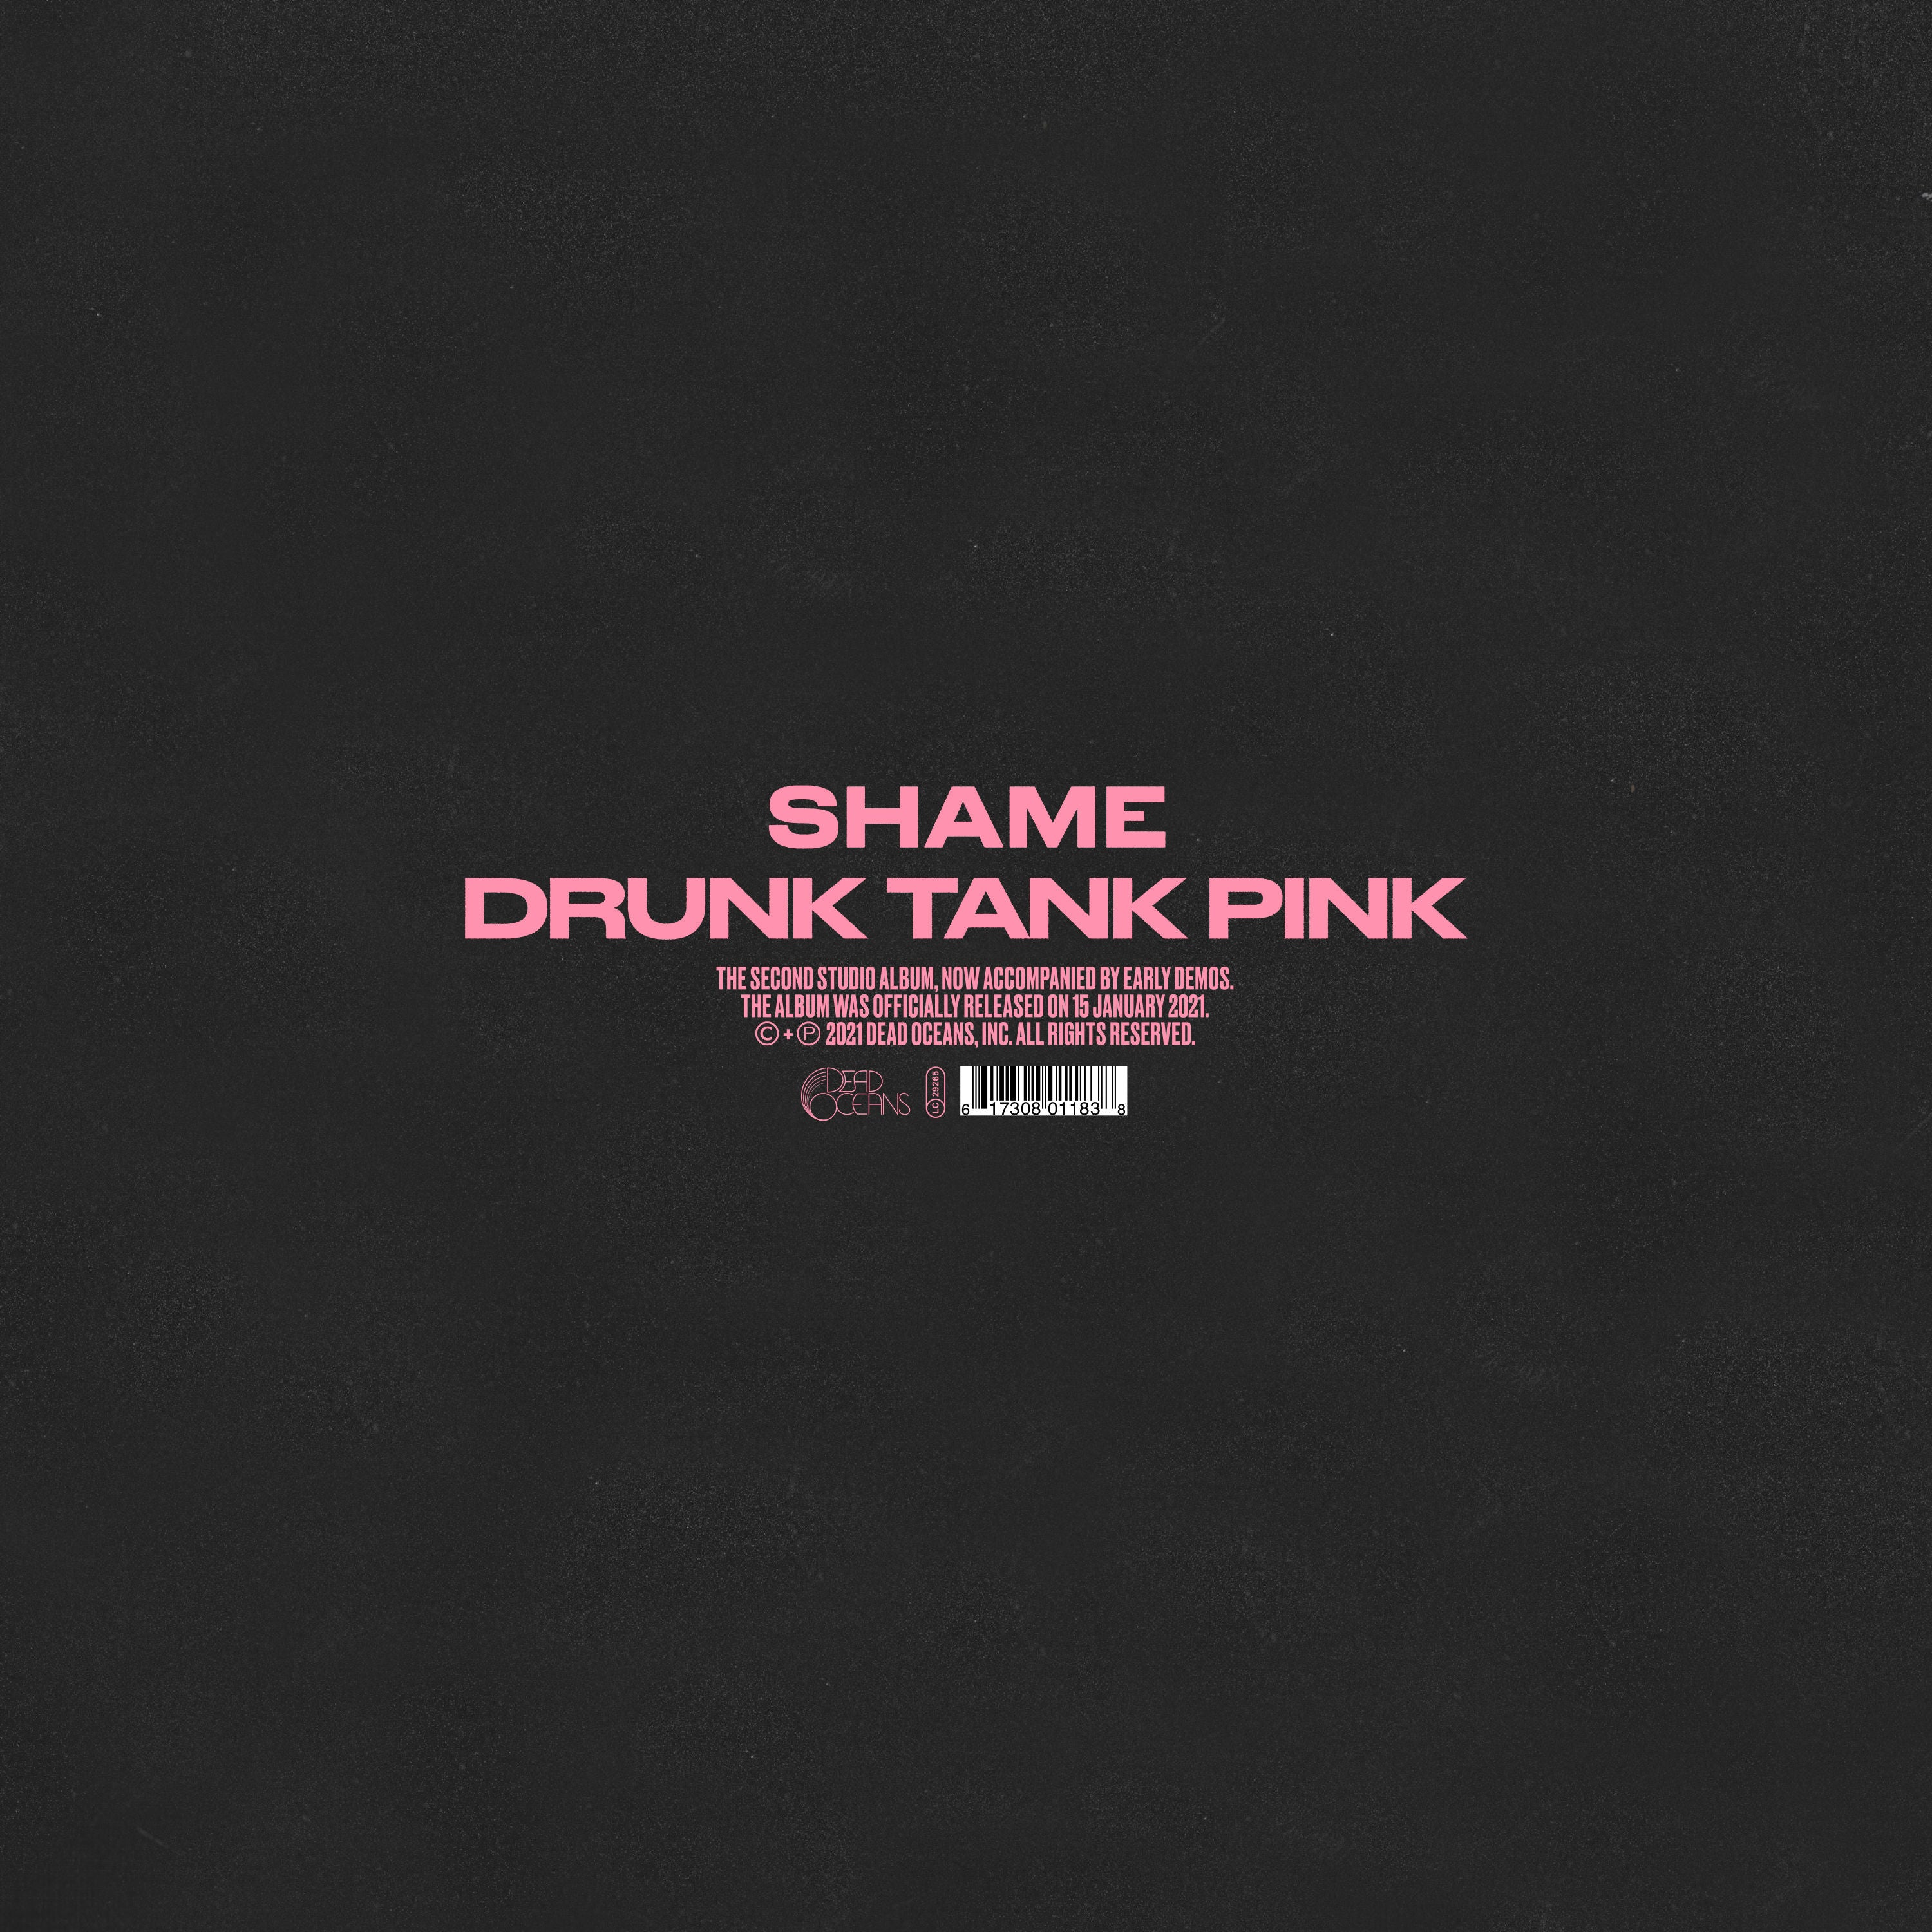 Drunk Tank Pink - Deluxe: Crystal Clear Vinyl 2LP